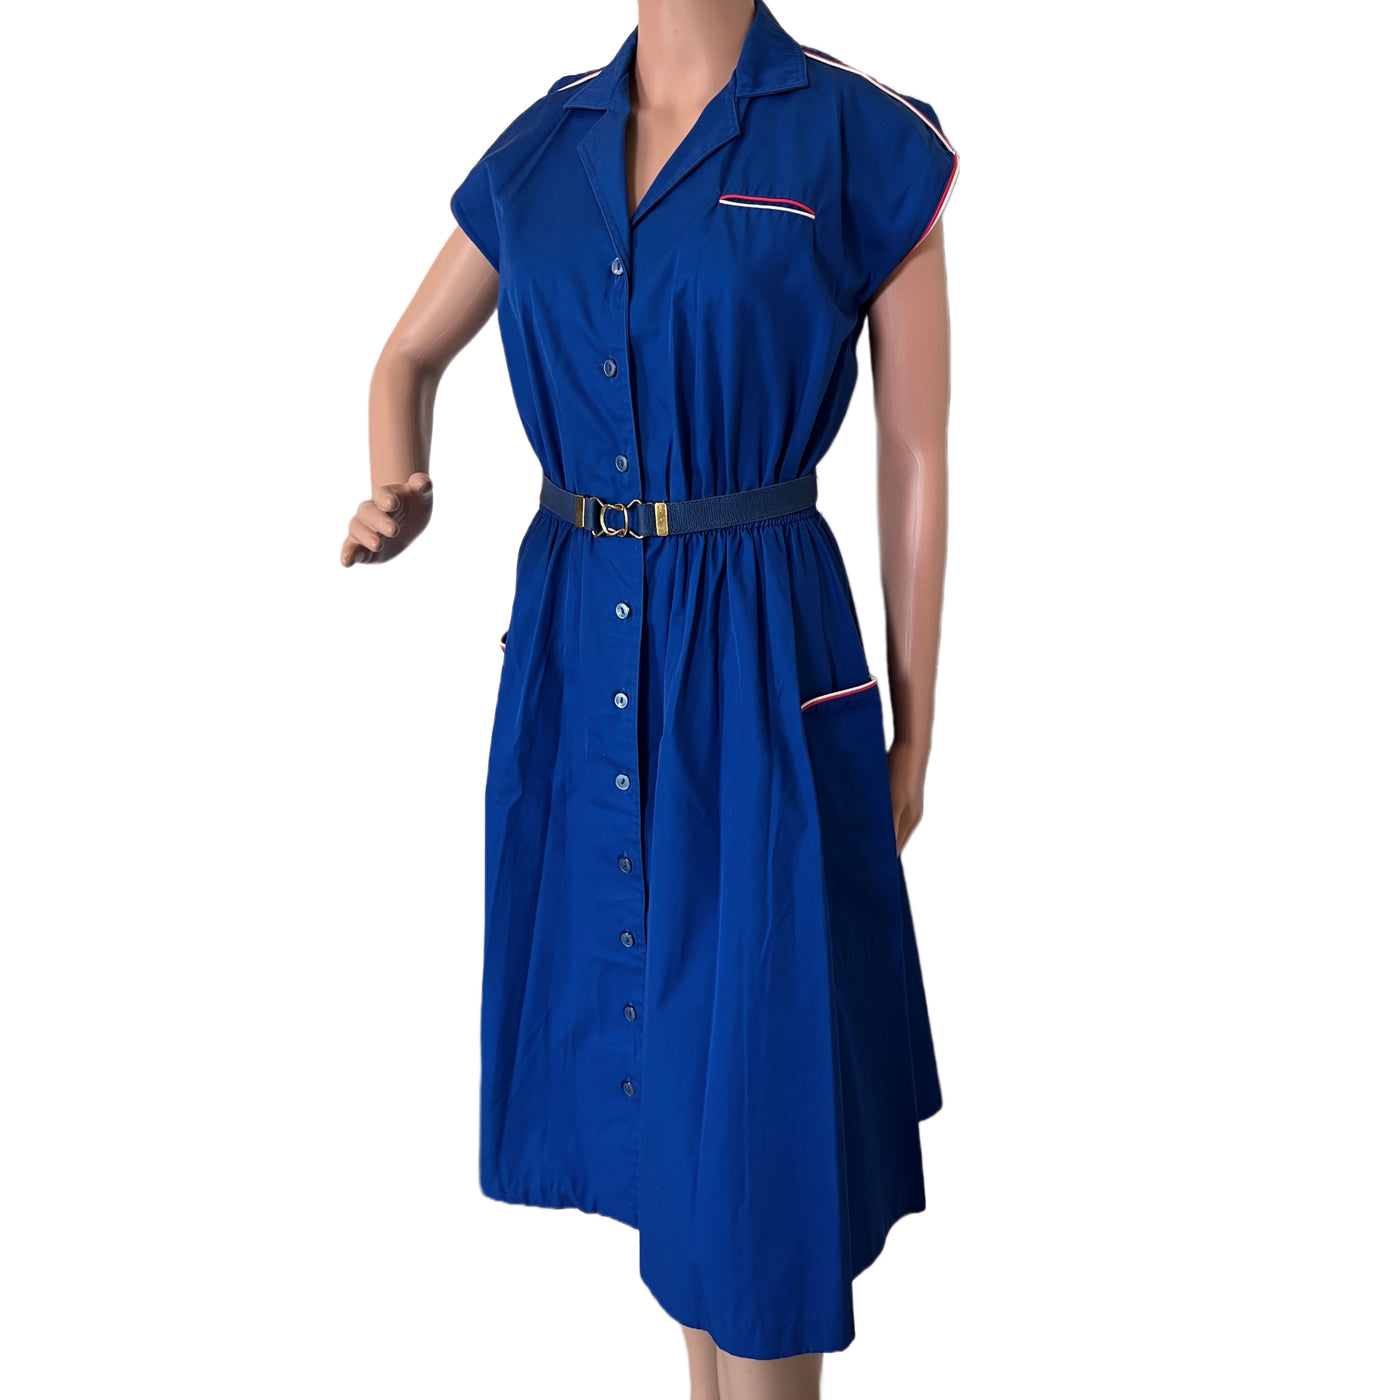 Vintage blue Sleeveless Dress